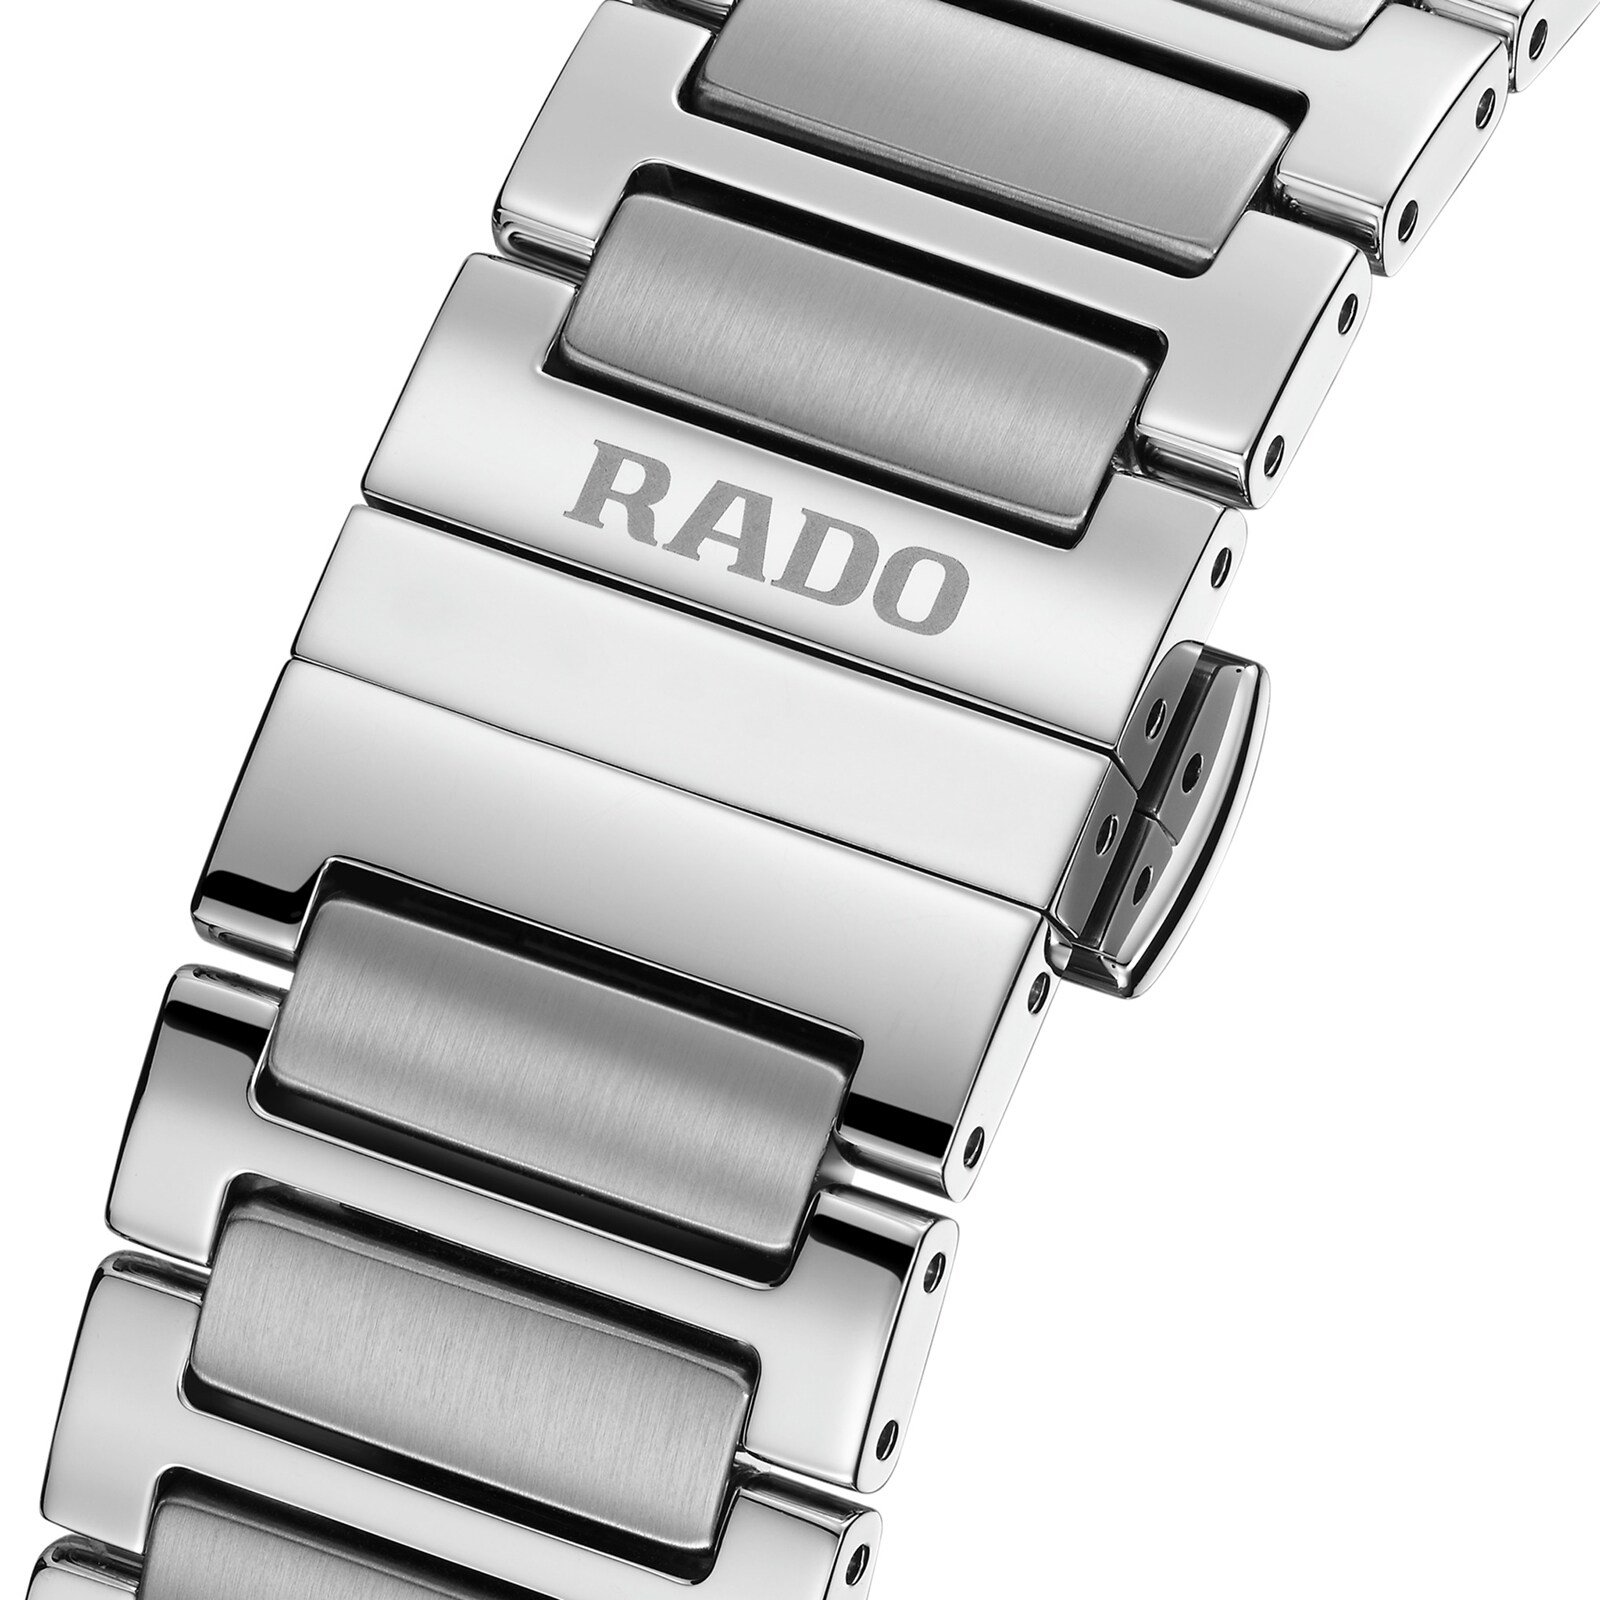 Rado Green horse - Automatic men's watch 11657/1 | eBay